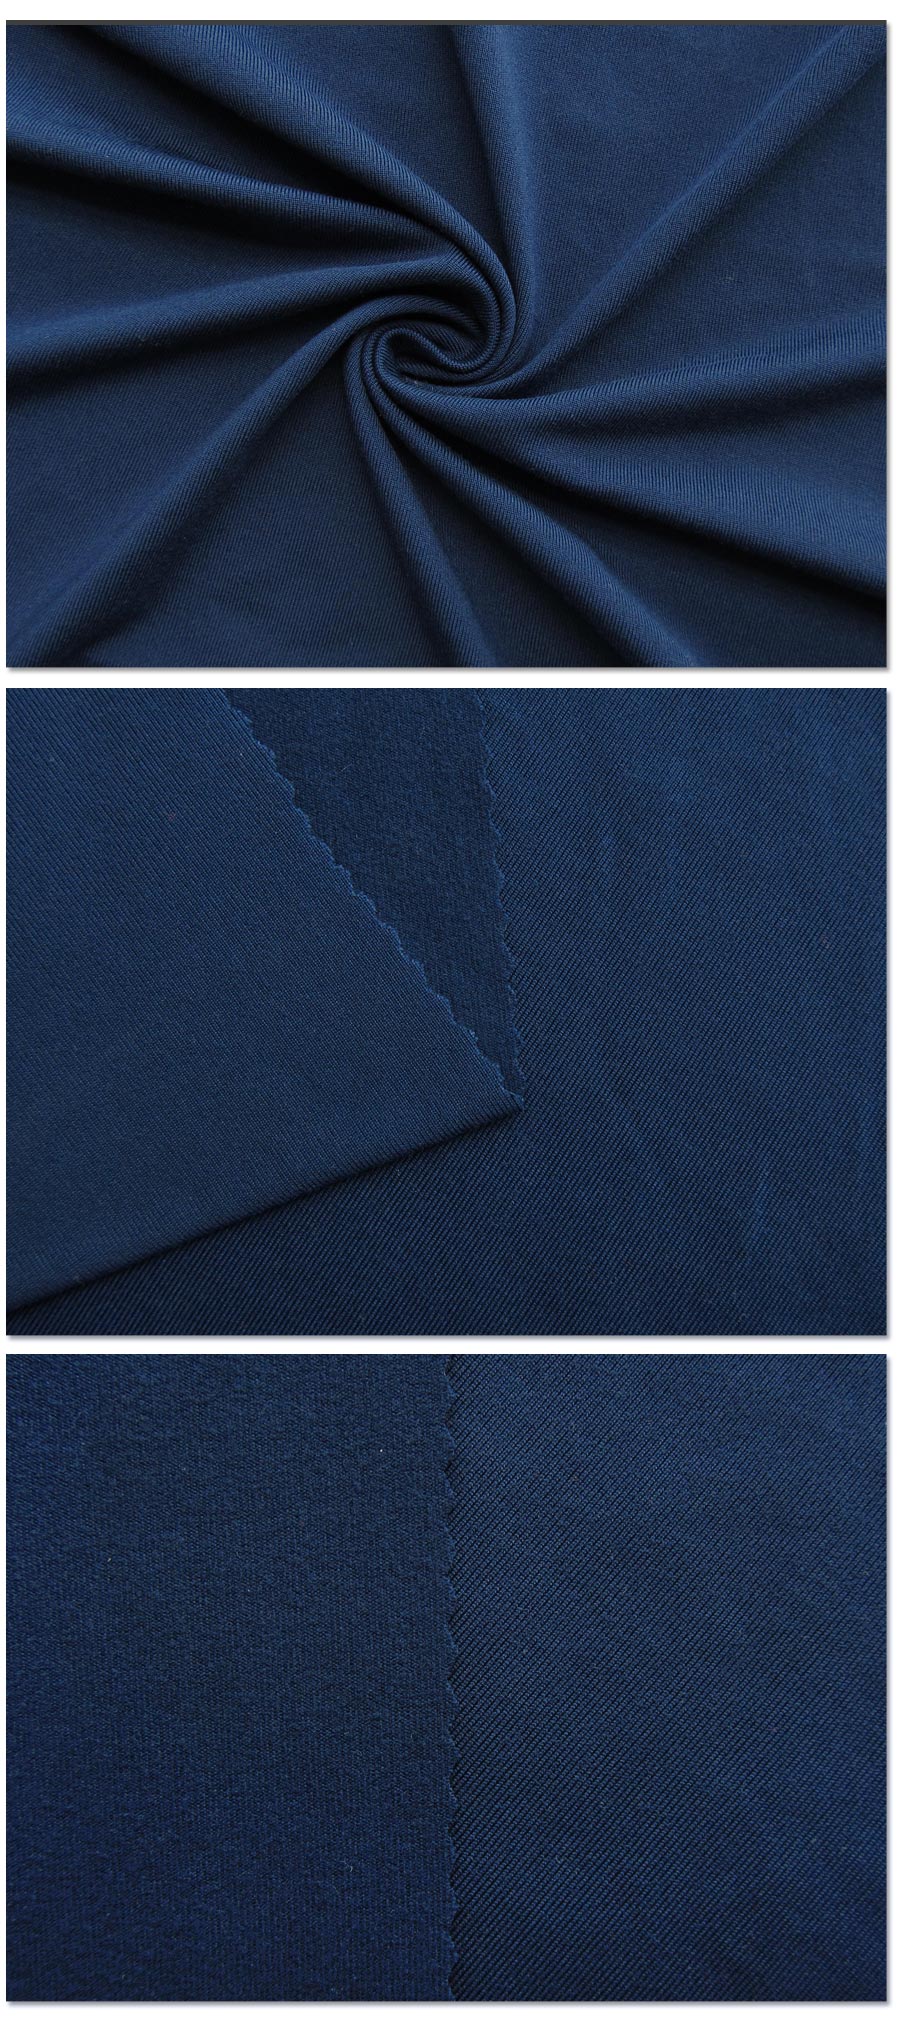 Koyu Mavi 1.80M 160G Süet Polyester Spandex Tişört Tek Jersey